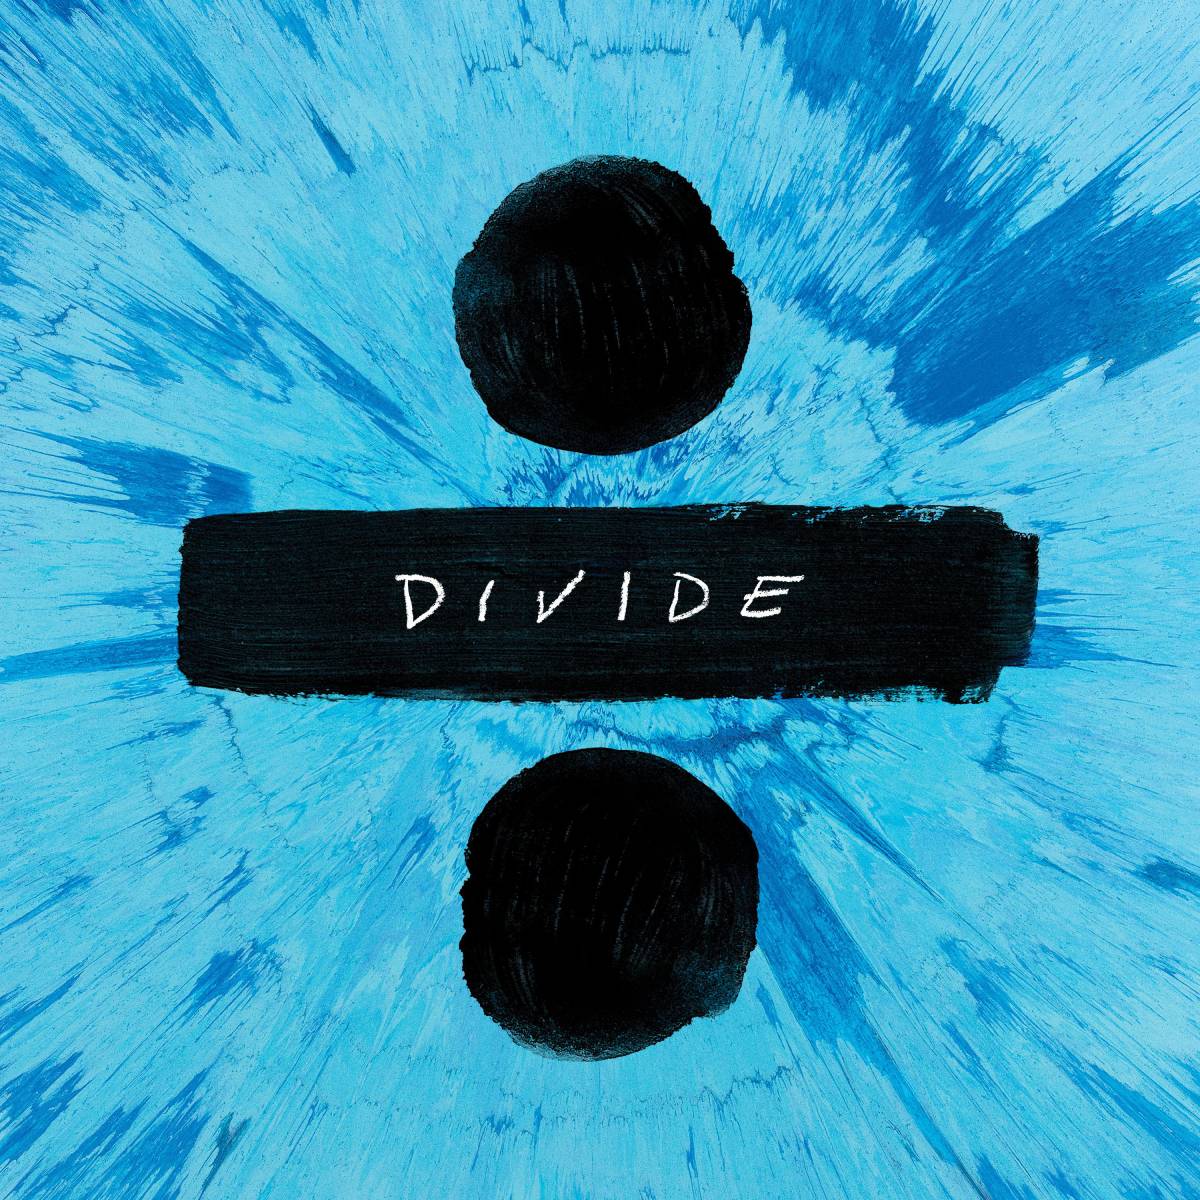 Divide (tercer álbum de Ed Sheeran)